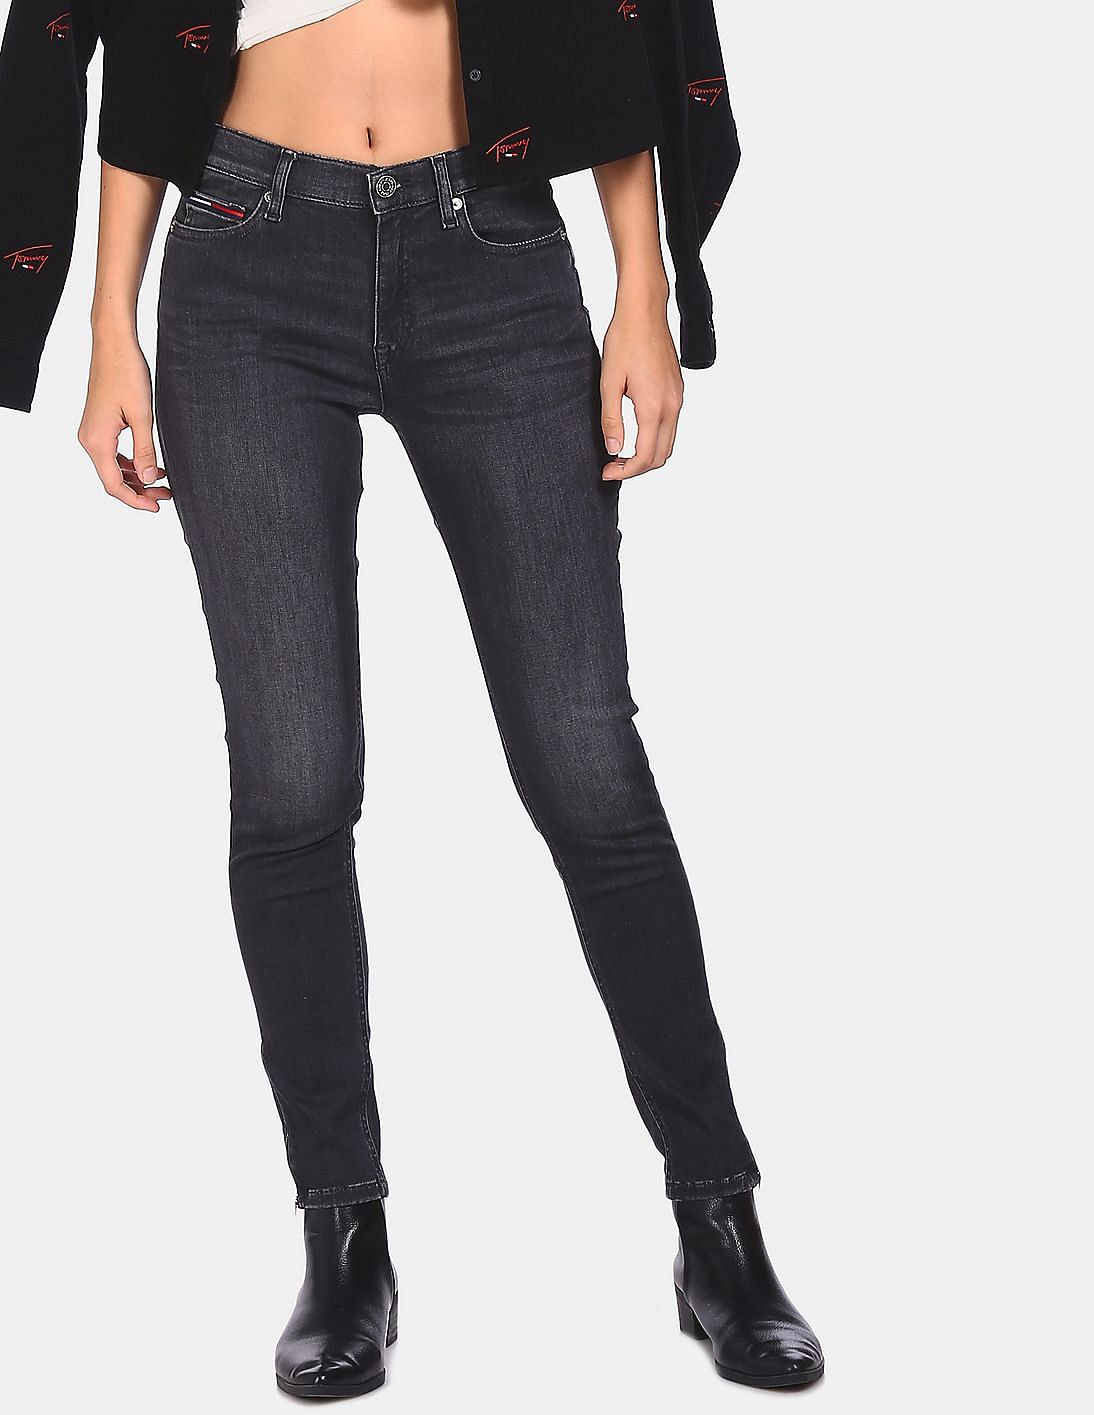 Verslaving tijdschrift Ja Buy Tommy Hilfiger Women Black Ankle Zip Nora Skinny Fit Jeans - NNNOW.com